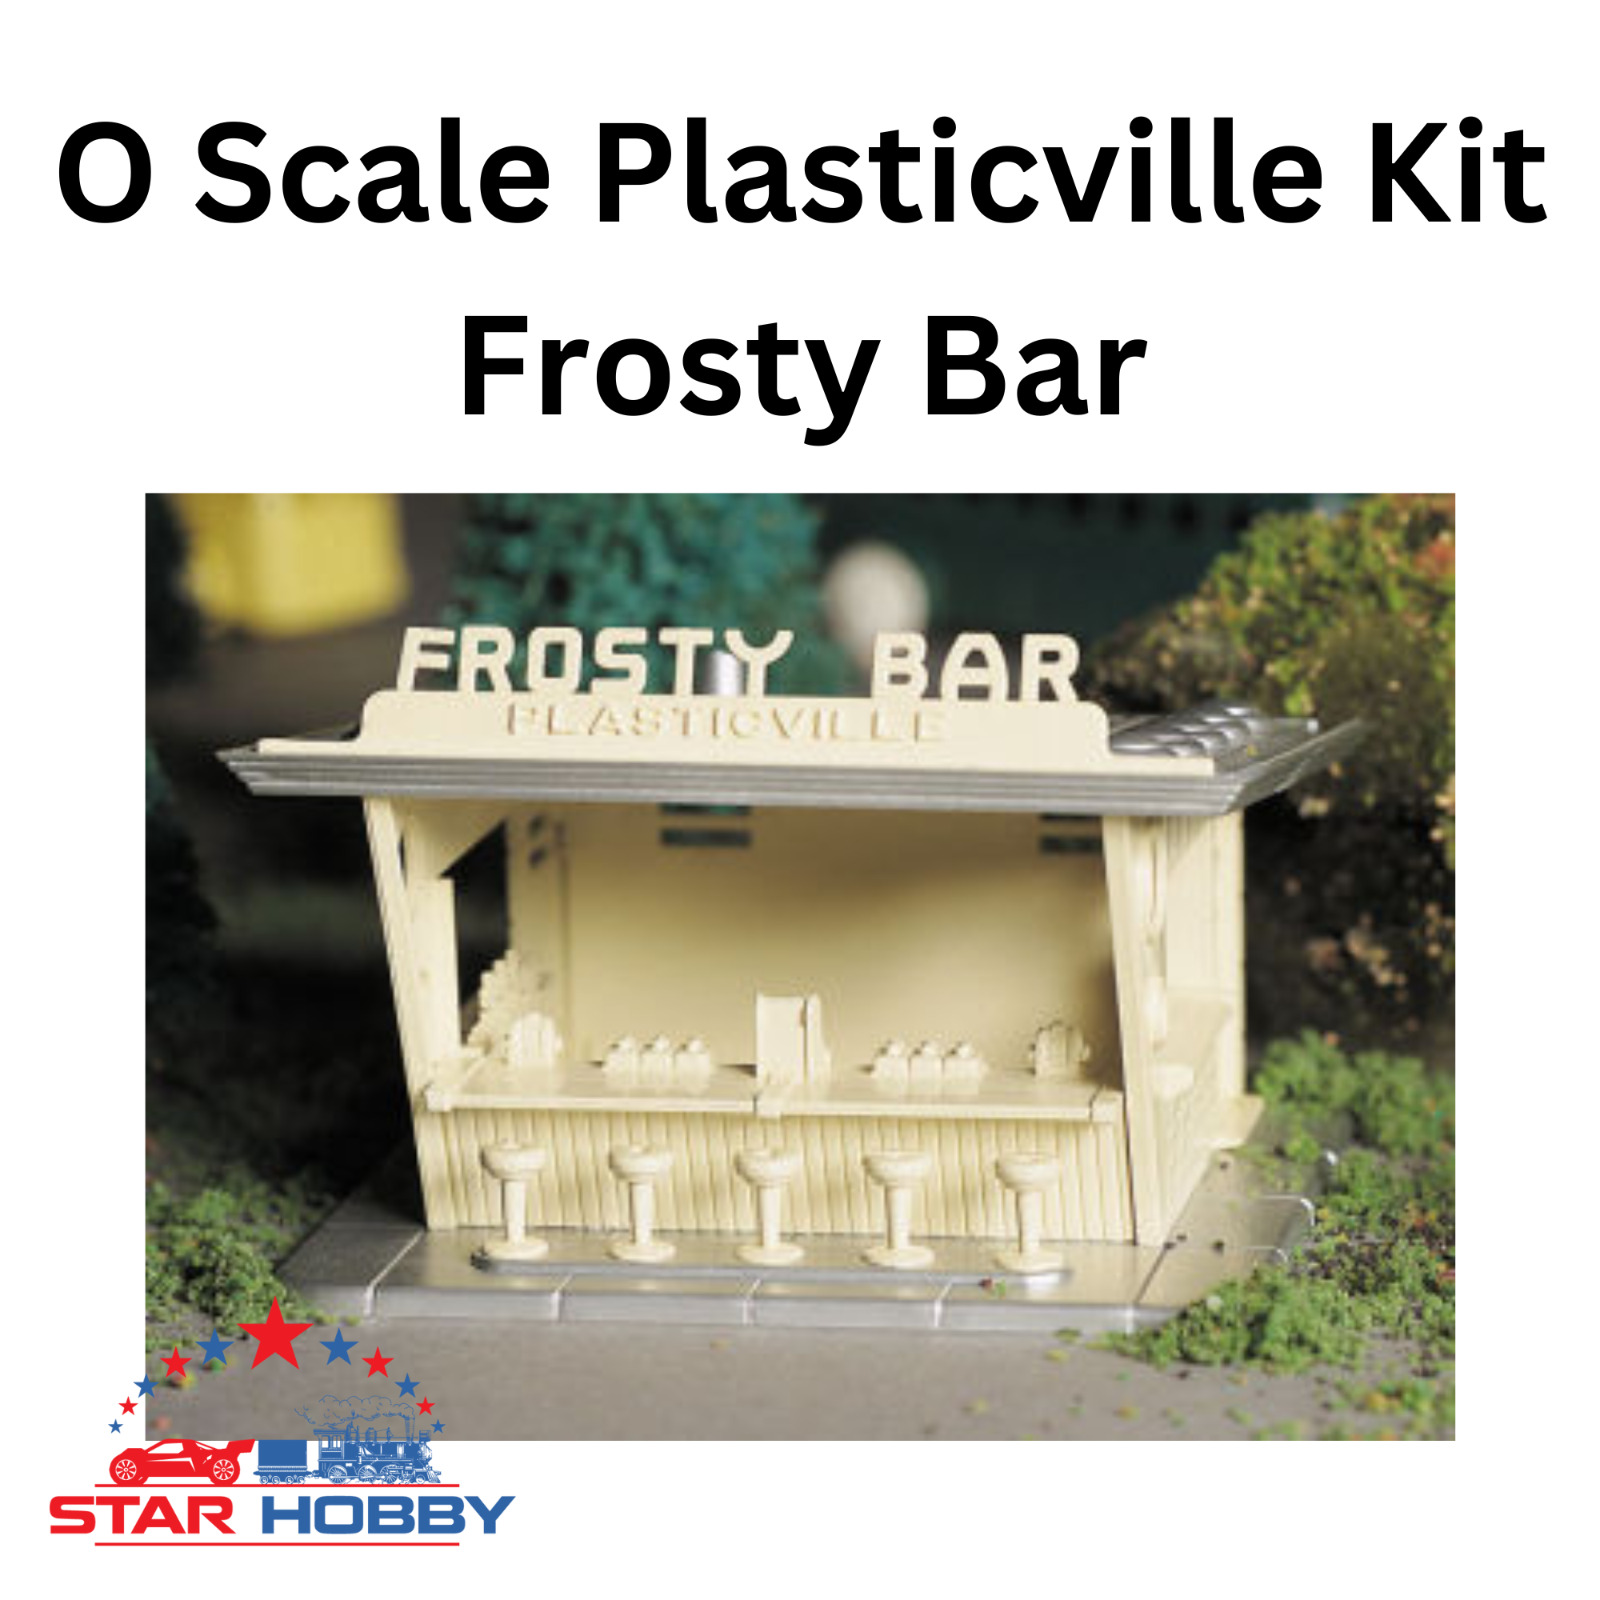 Bachmann 45606 Frosty Bar Plasticville Kit Model Railroading